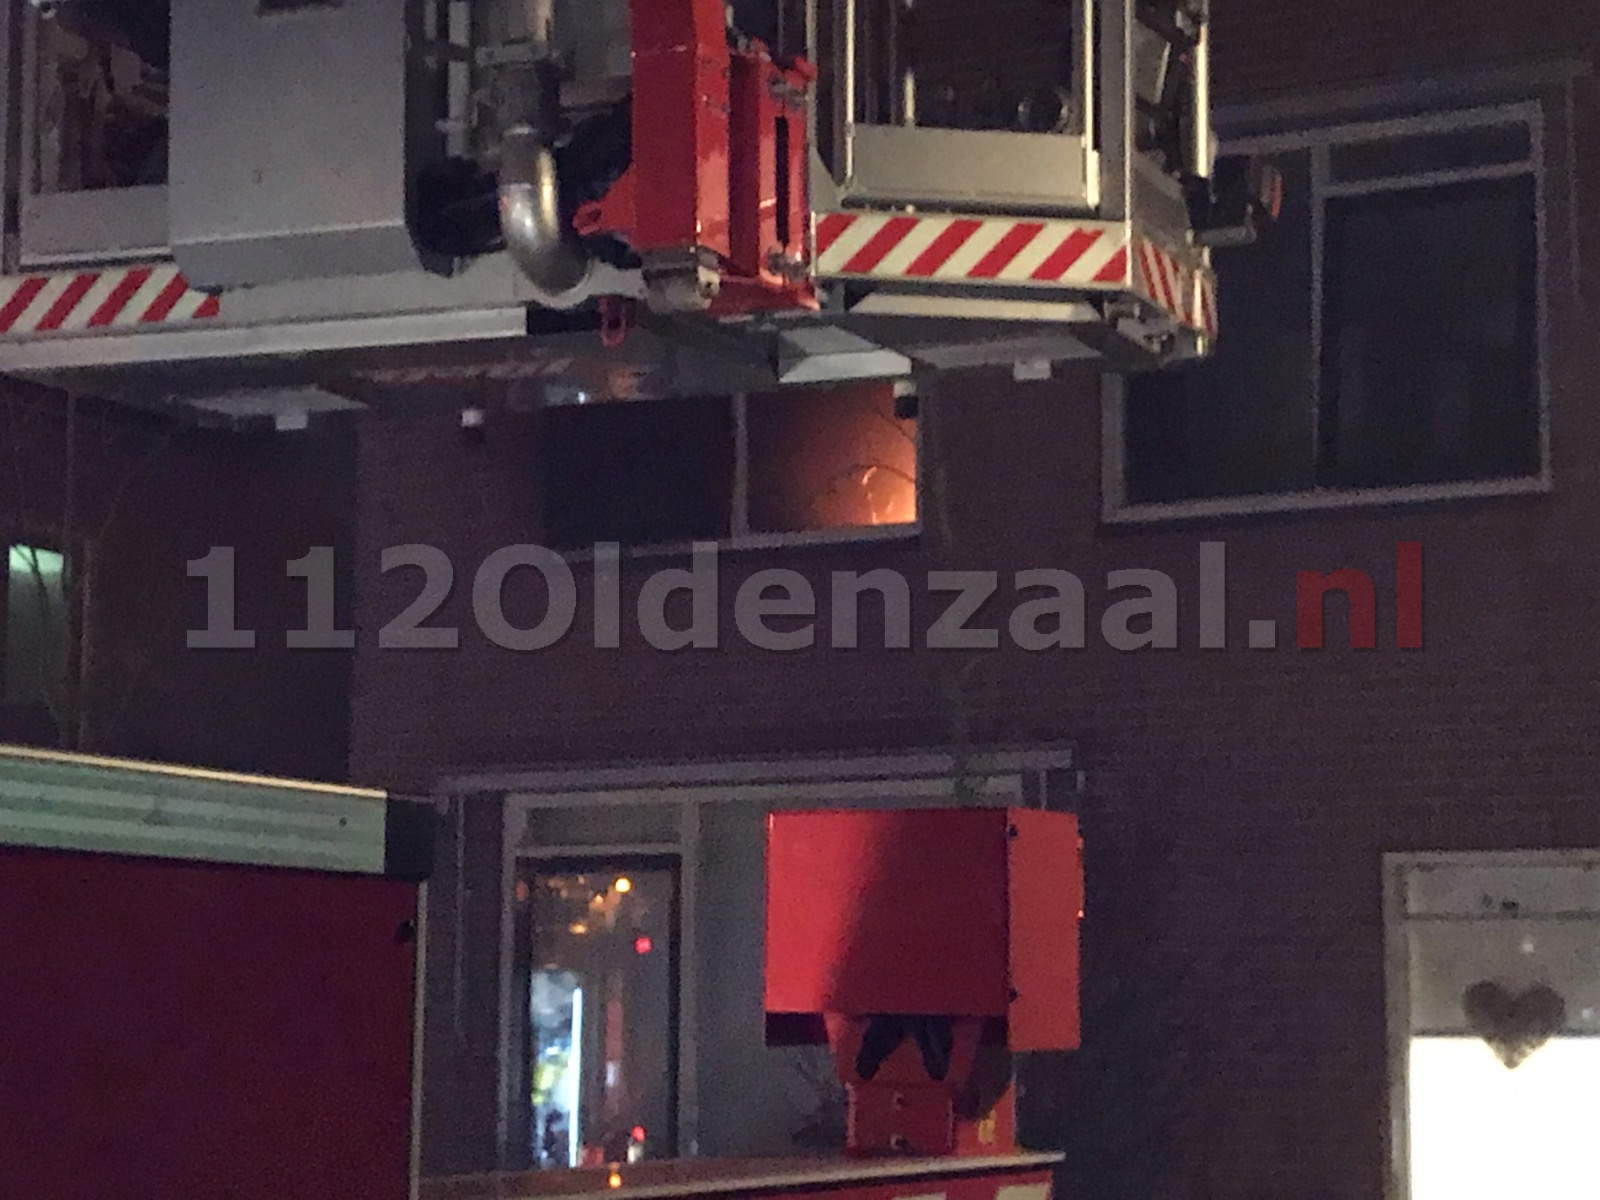 Brand in slaapkamer jeugdzorginstelling Oldenzaal